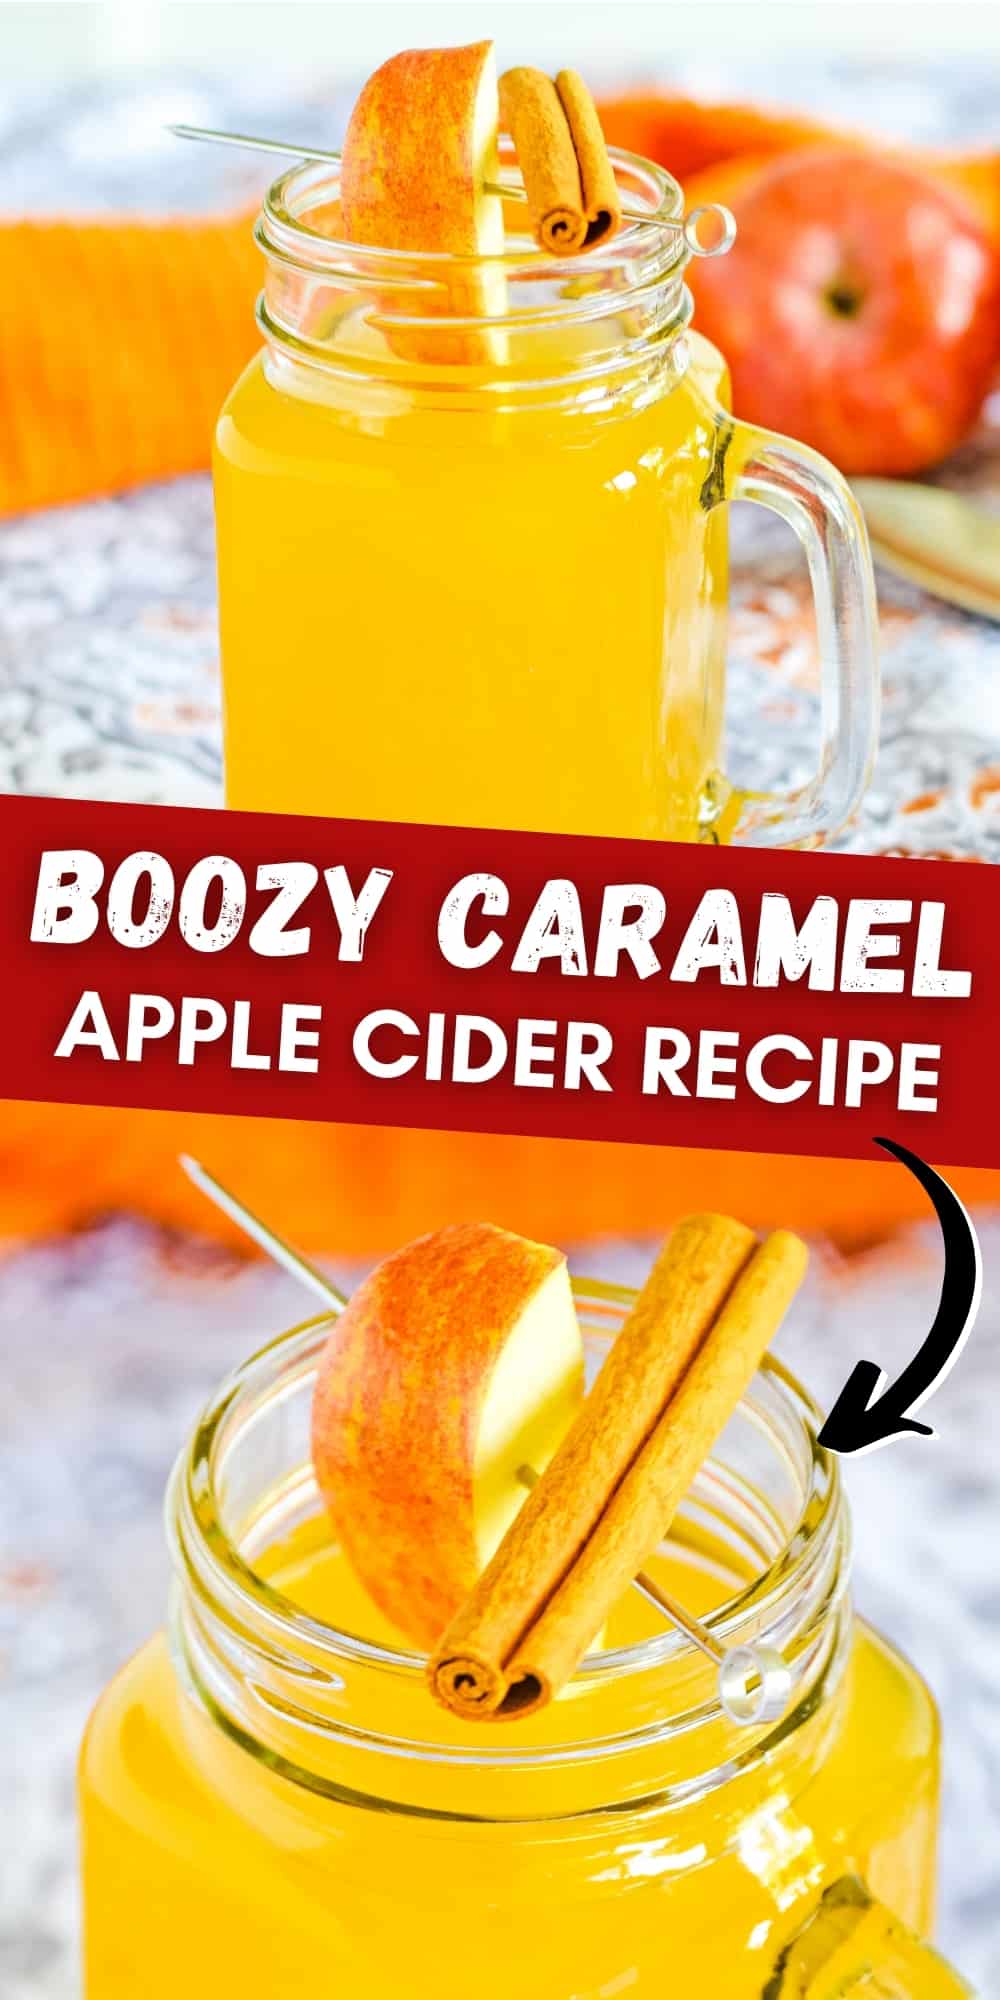 Boozy Caramel Apple Cider Recipe Pin Image